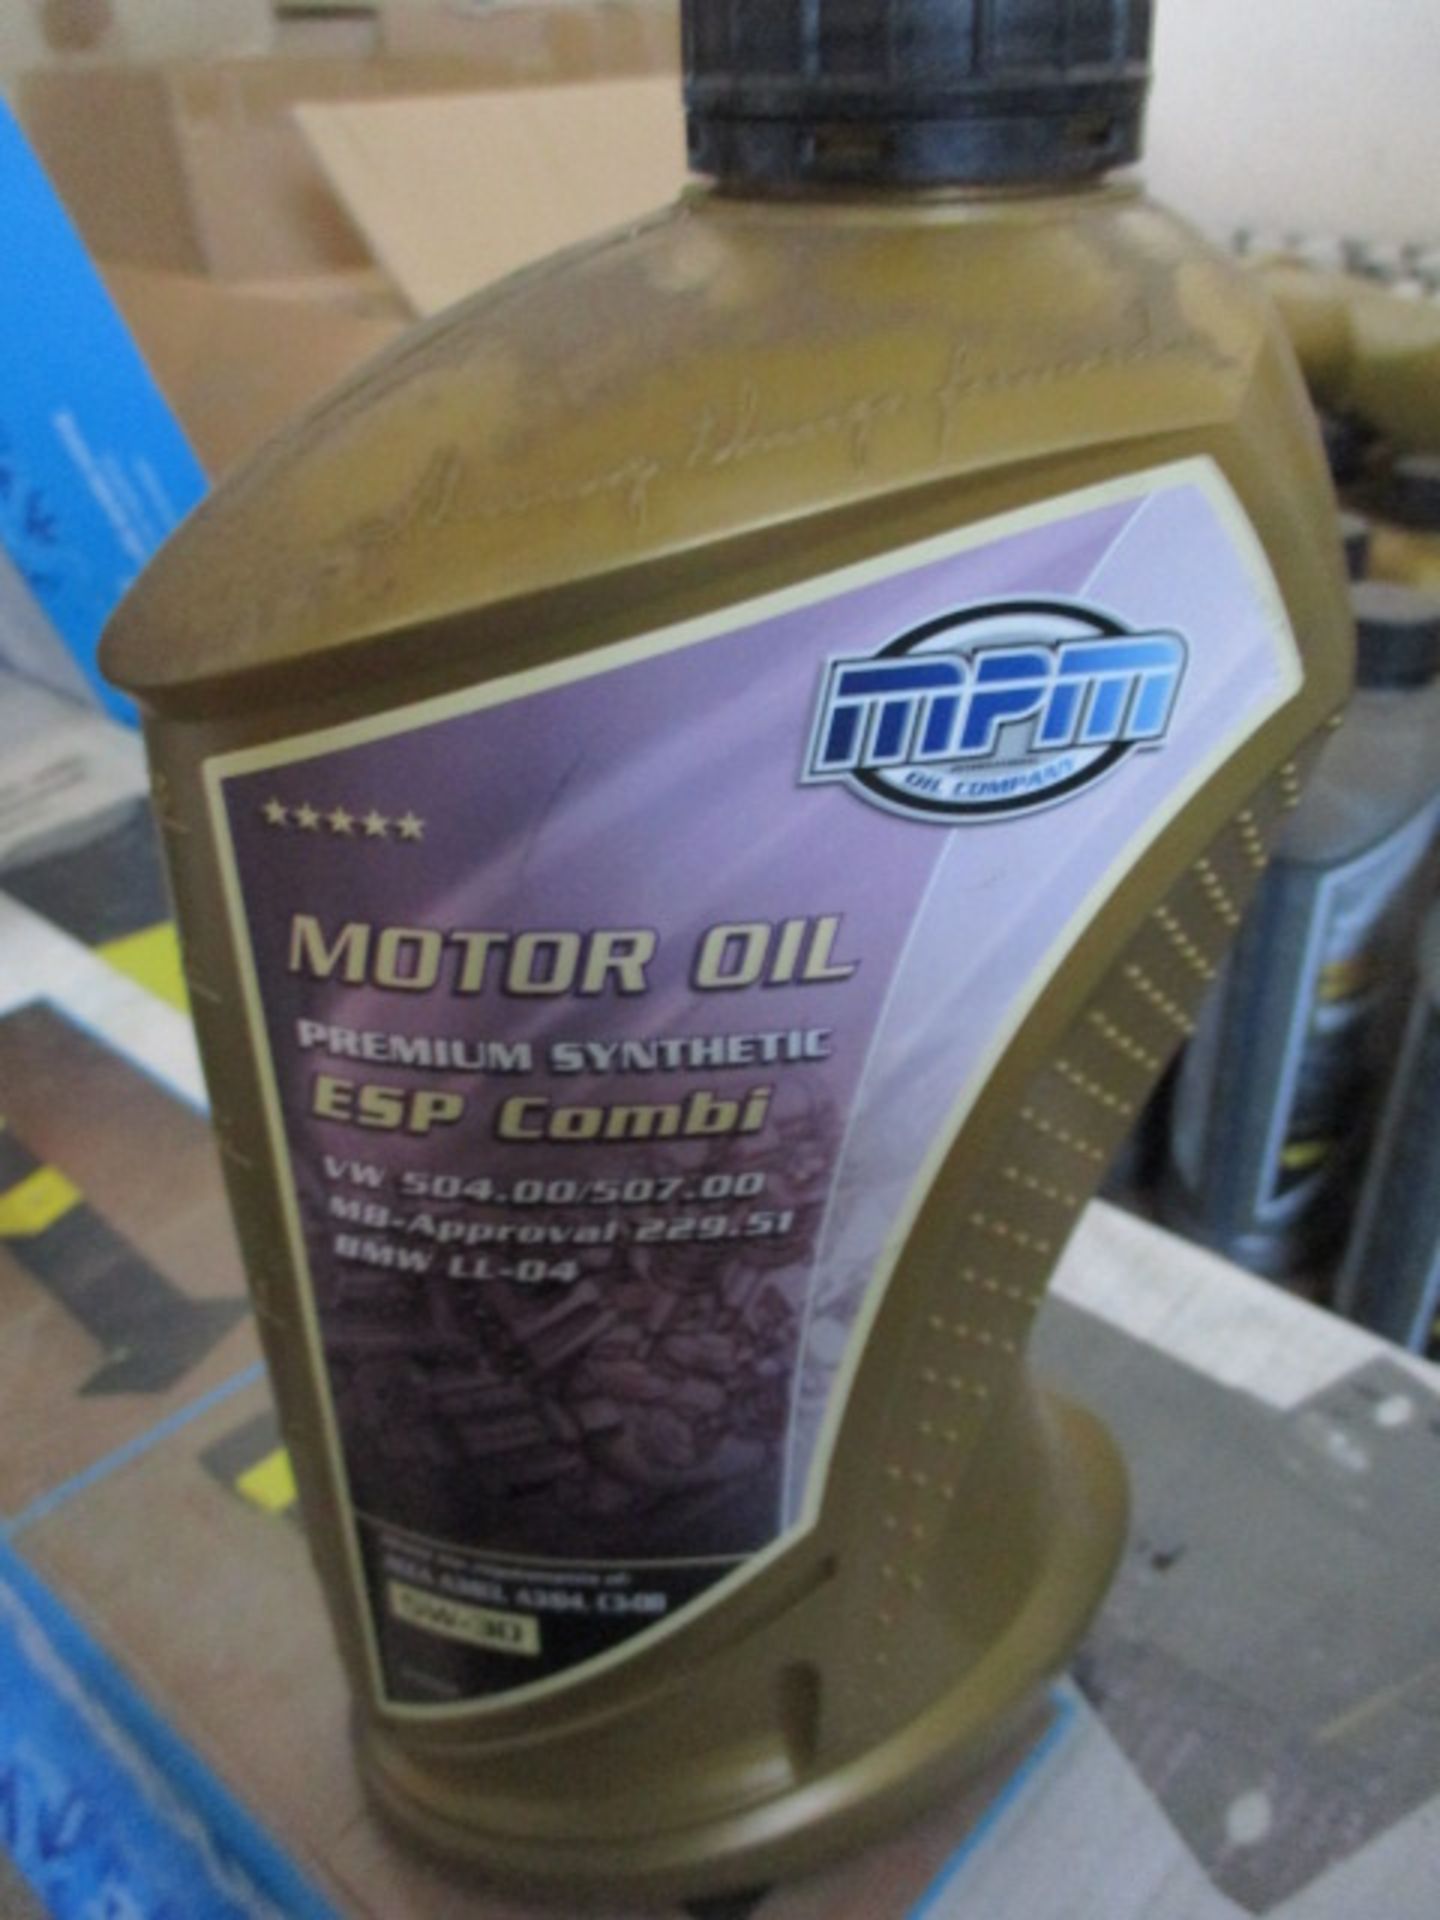 MPM premium synthetic ESP combi motor oil 5W-30.